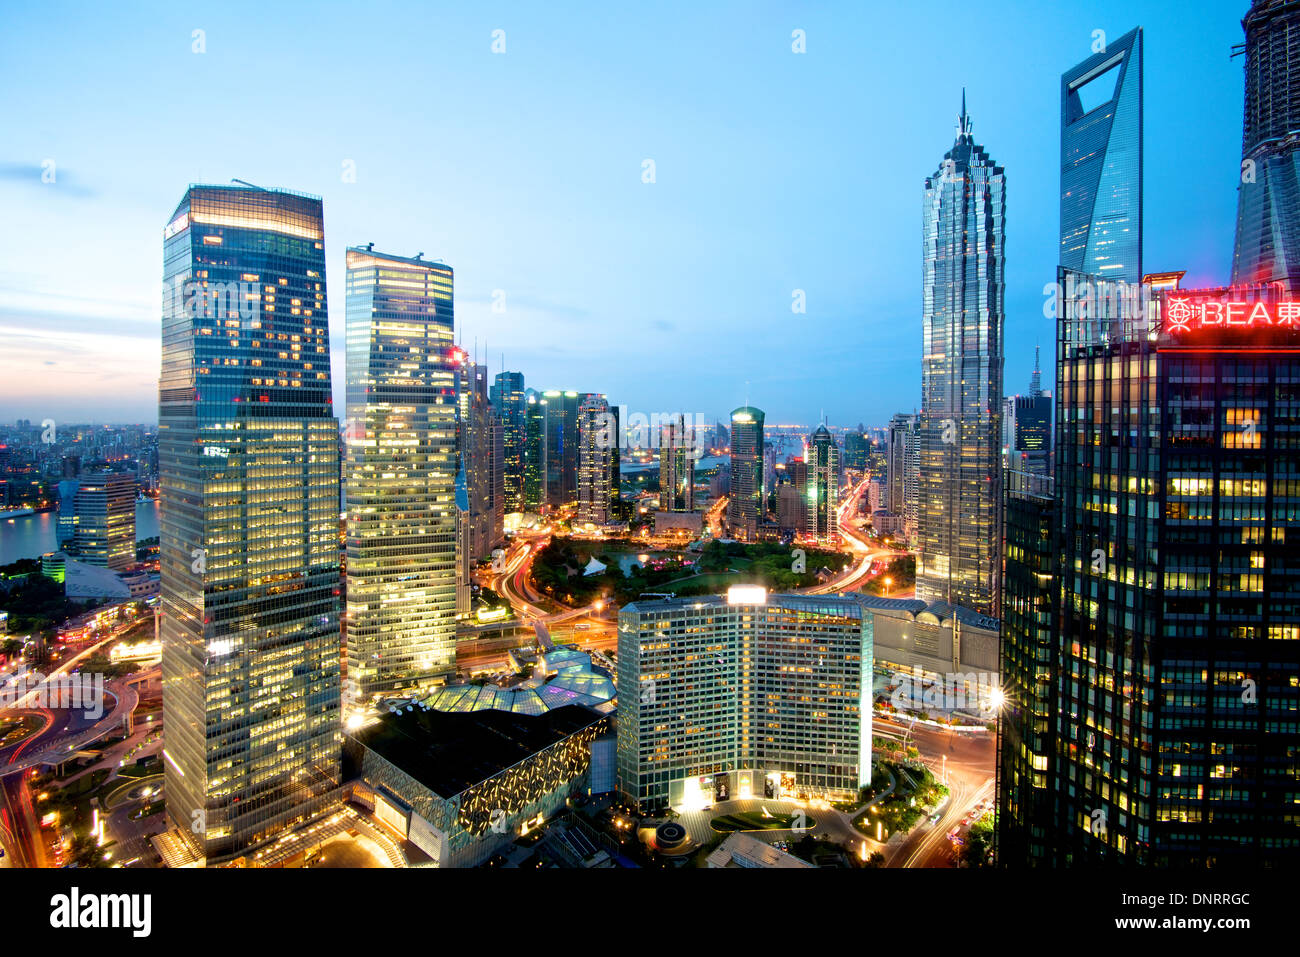 beautiful Shanghai tower building night view Stock Photo